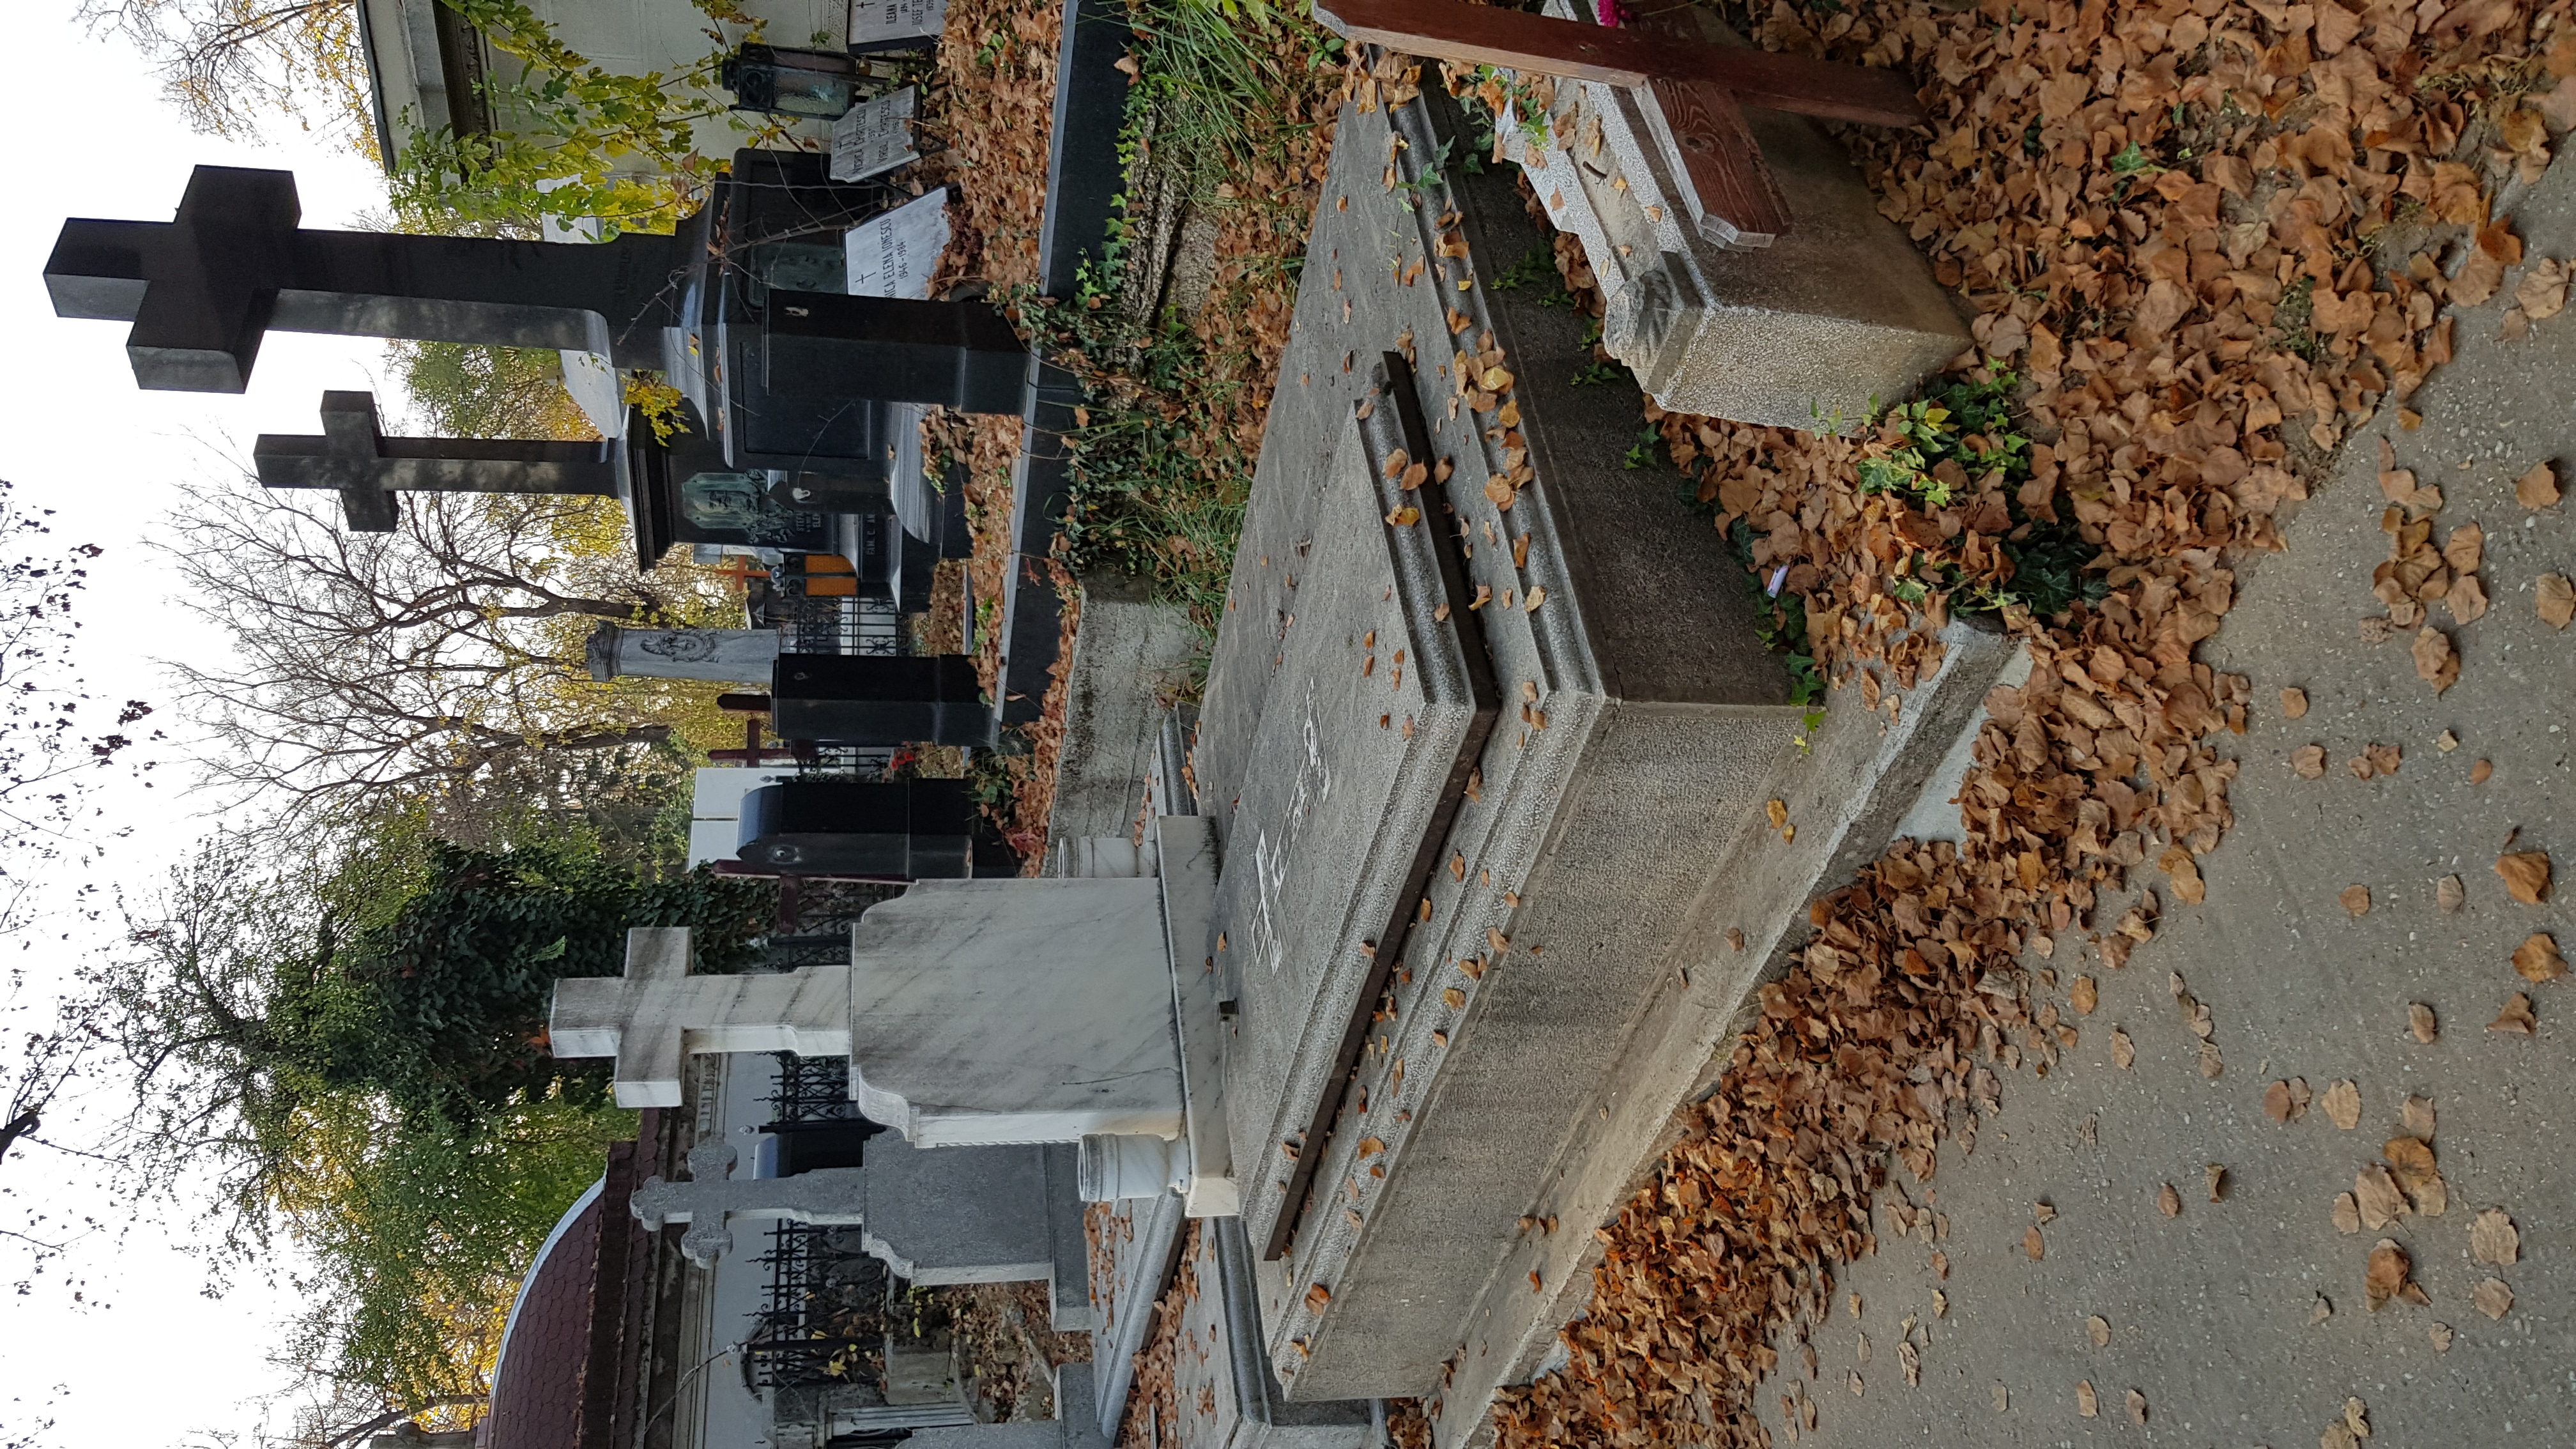 Loc de veci in Cimitirul Bellu